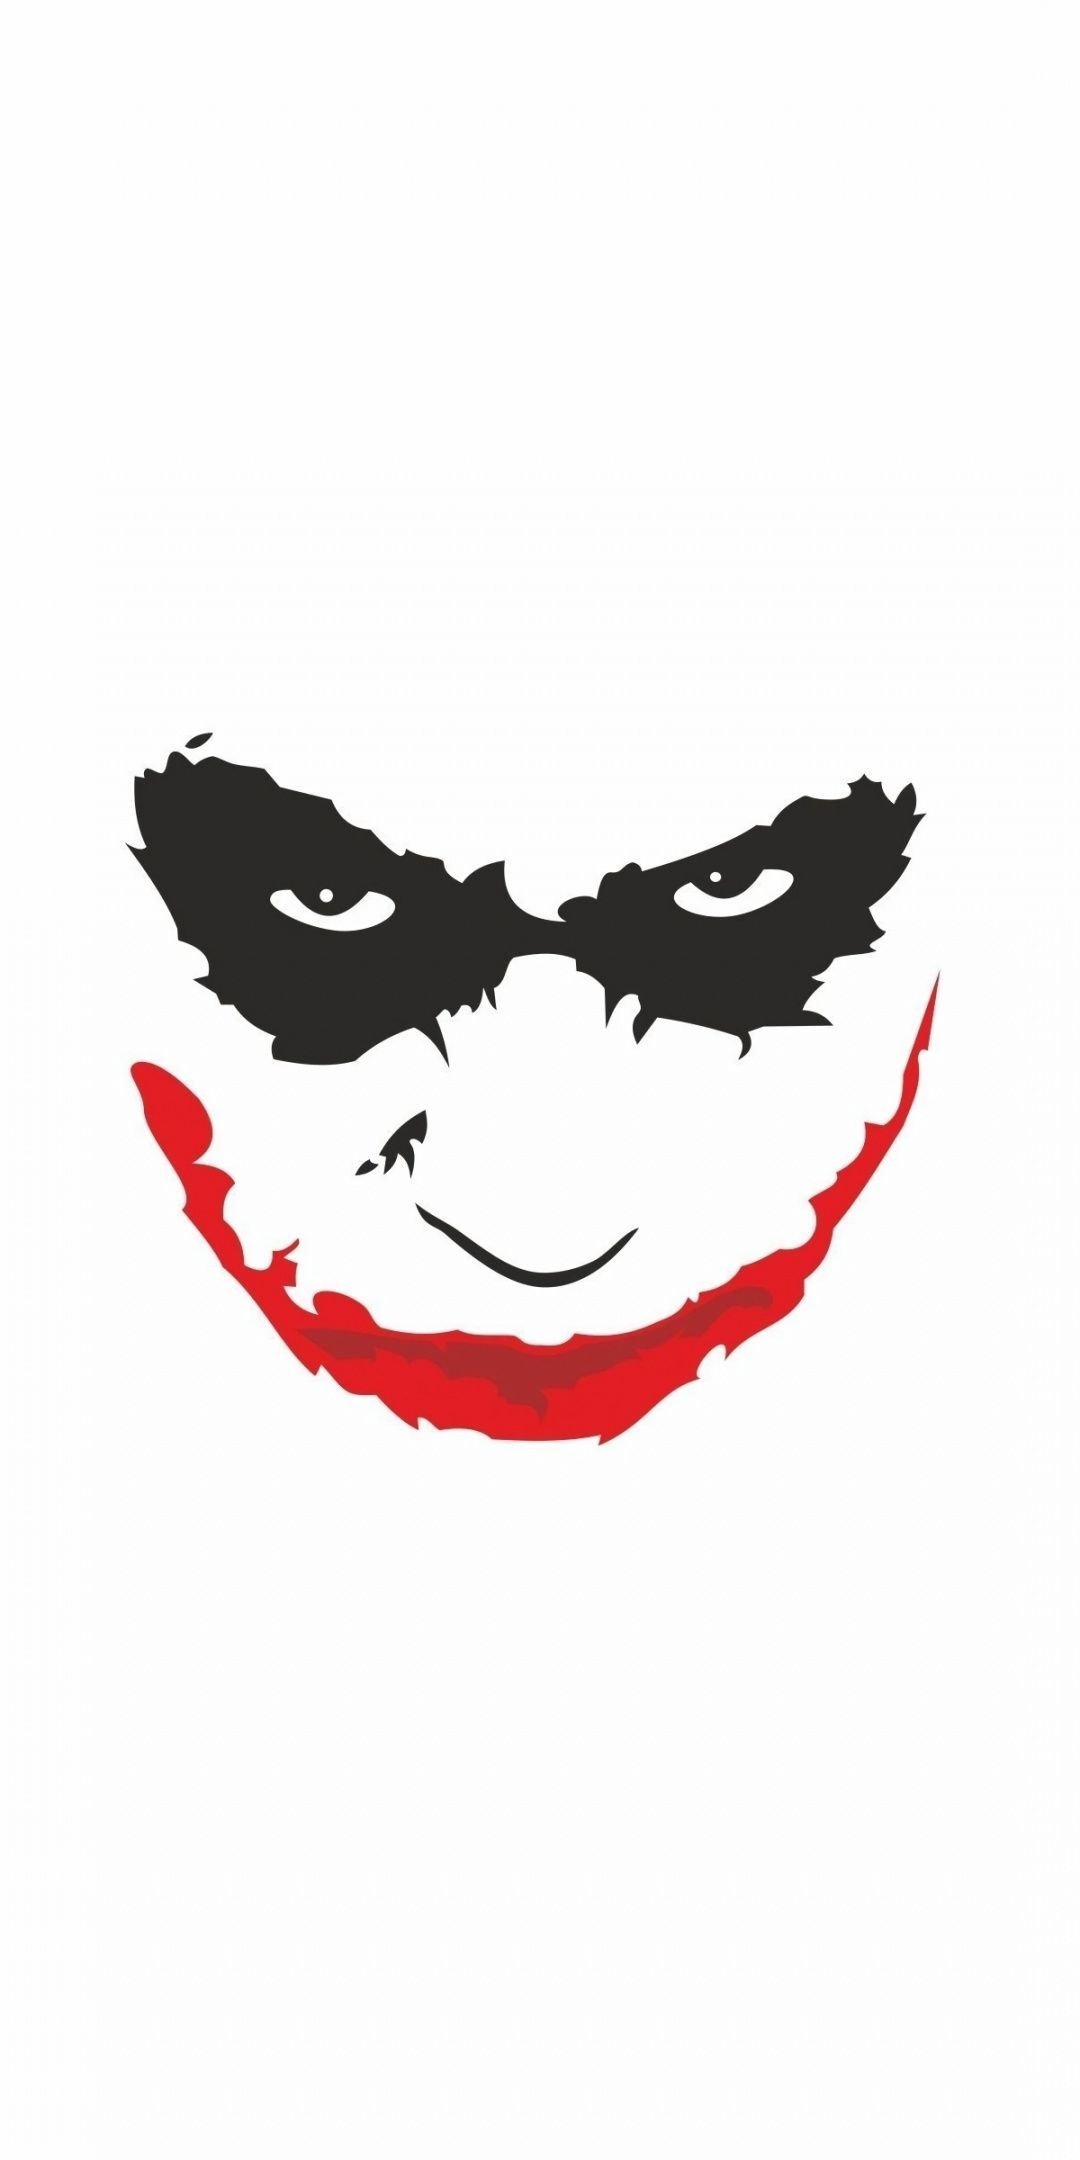 Joker Quick Sketches on Behance